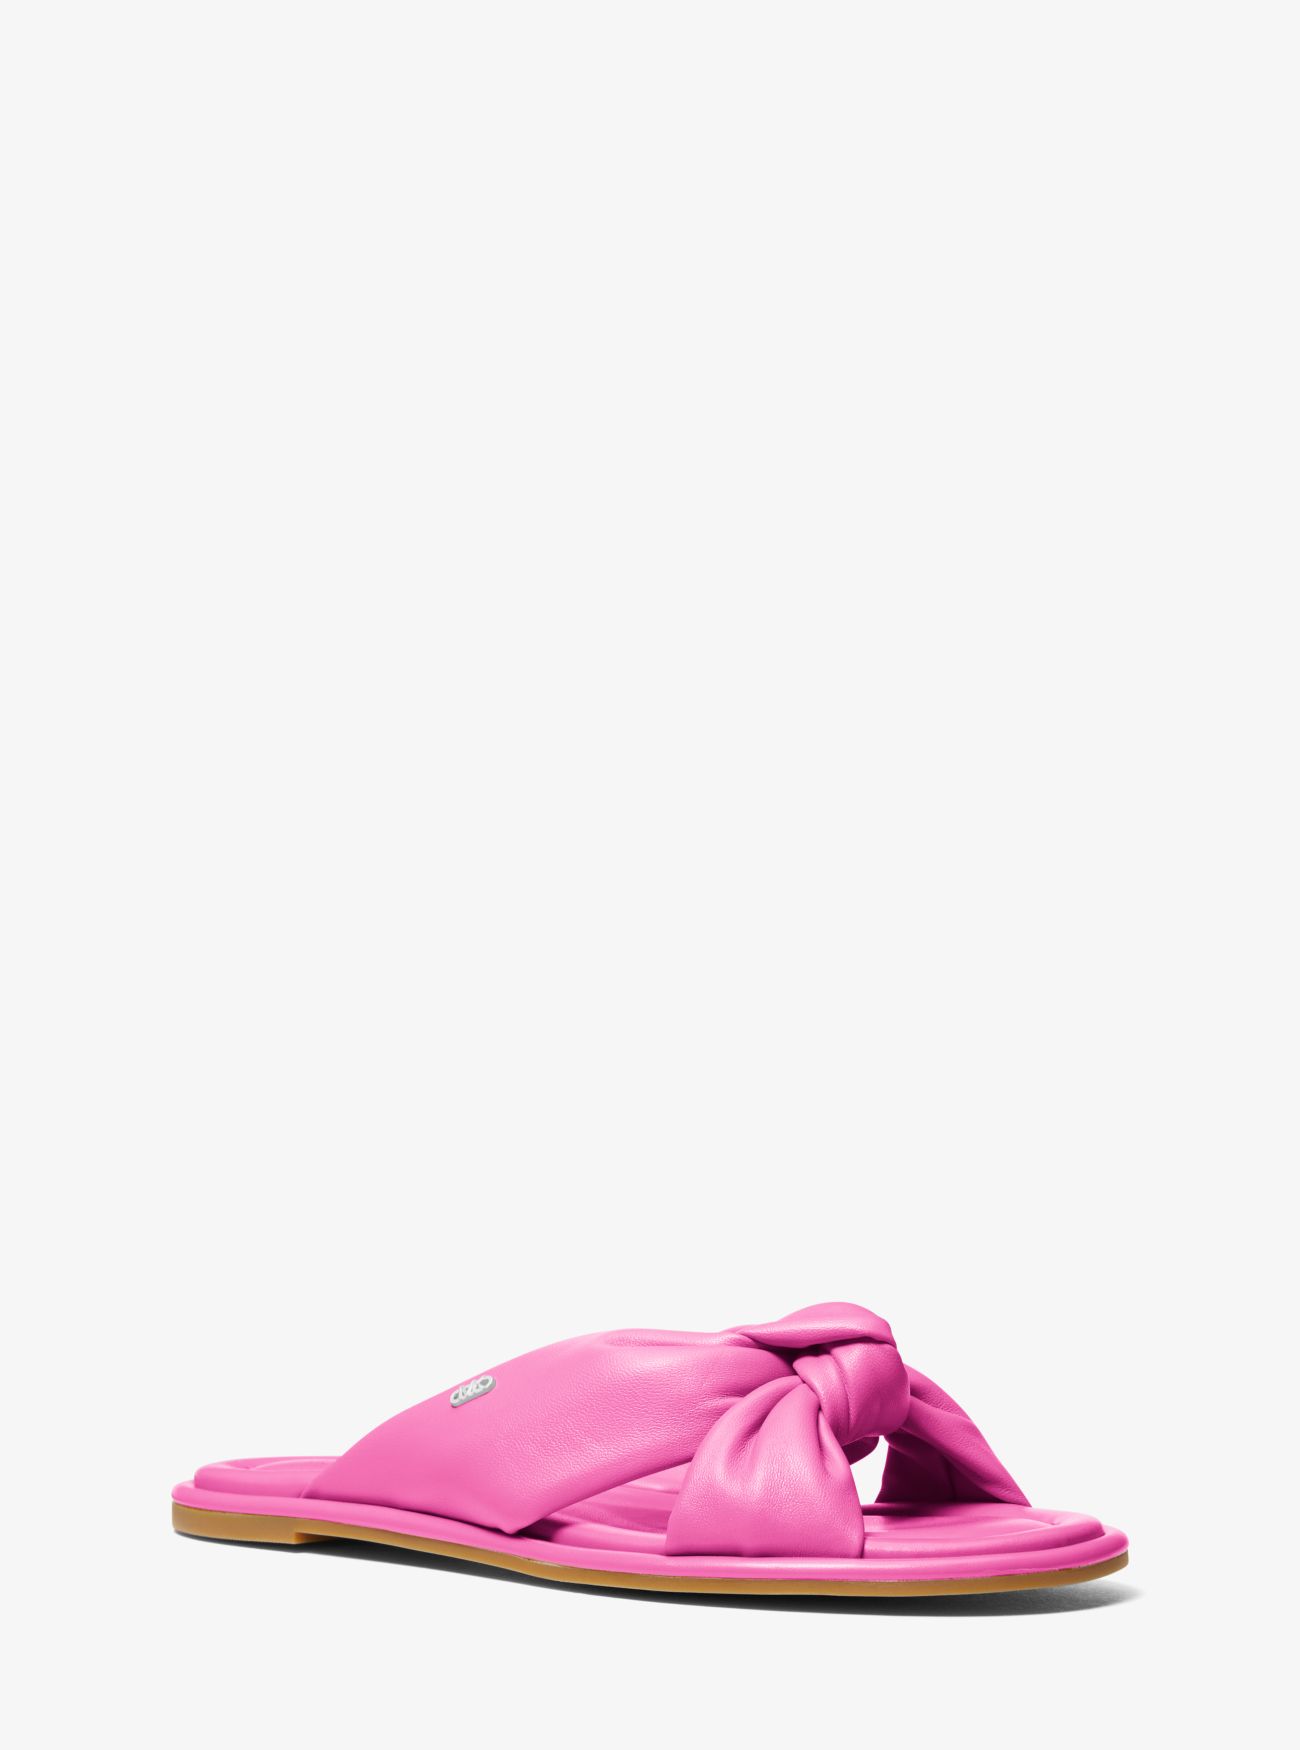 MK Elena Leather Slide Sandal - Pink - Michael Kors